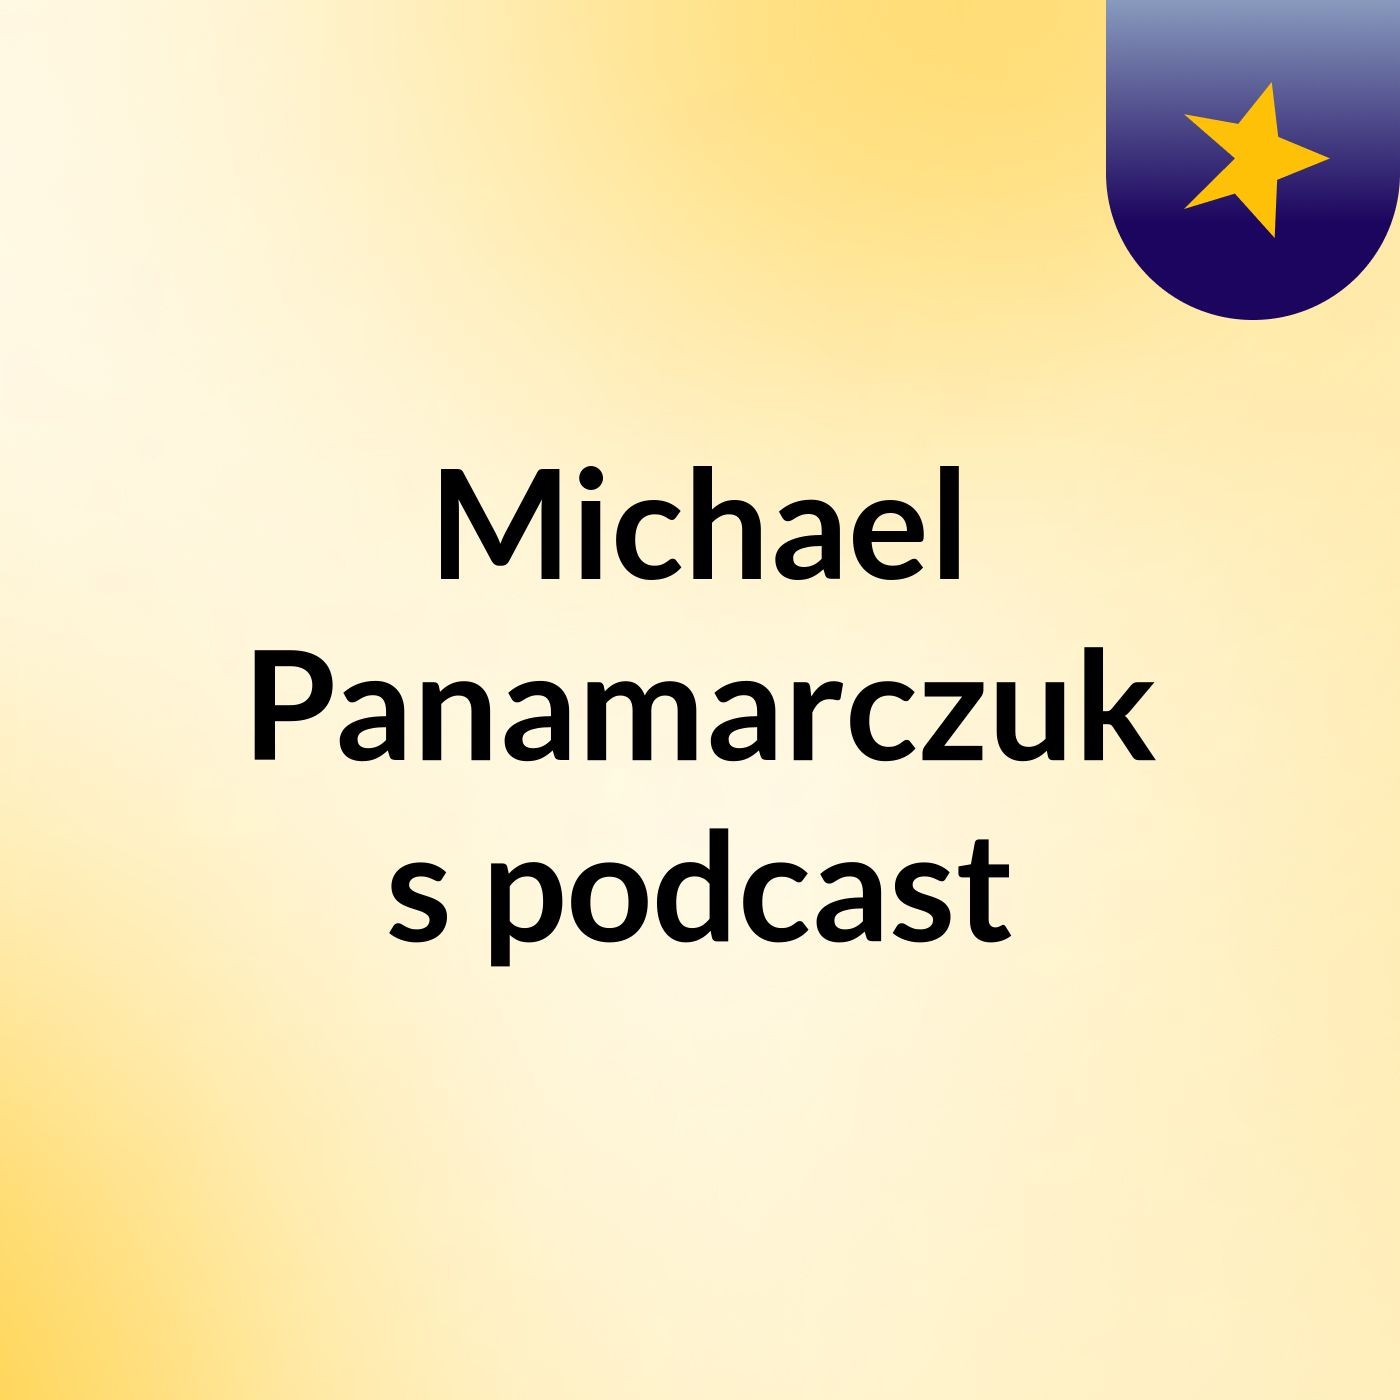 Episode 2 - Michael Panamarczuk's podcast